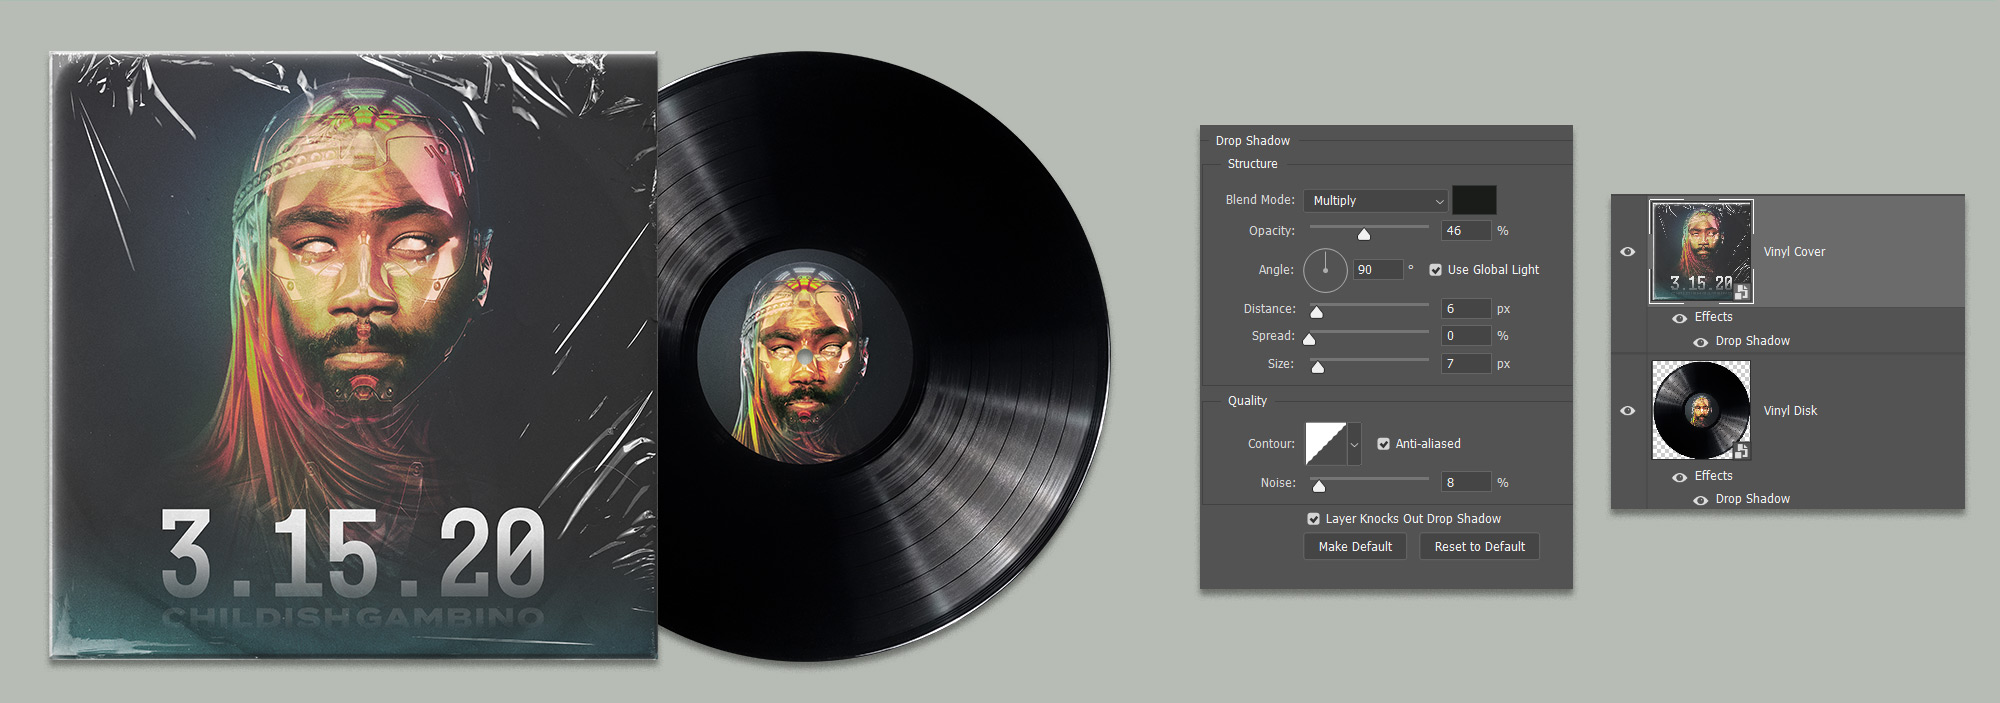 Vinyl disk design mockup in Photoshop for Childish Gambino 3.15.20